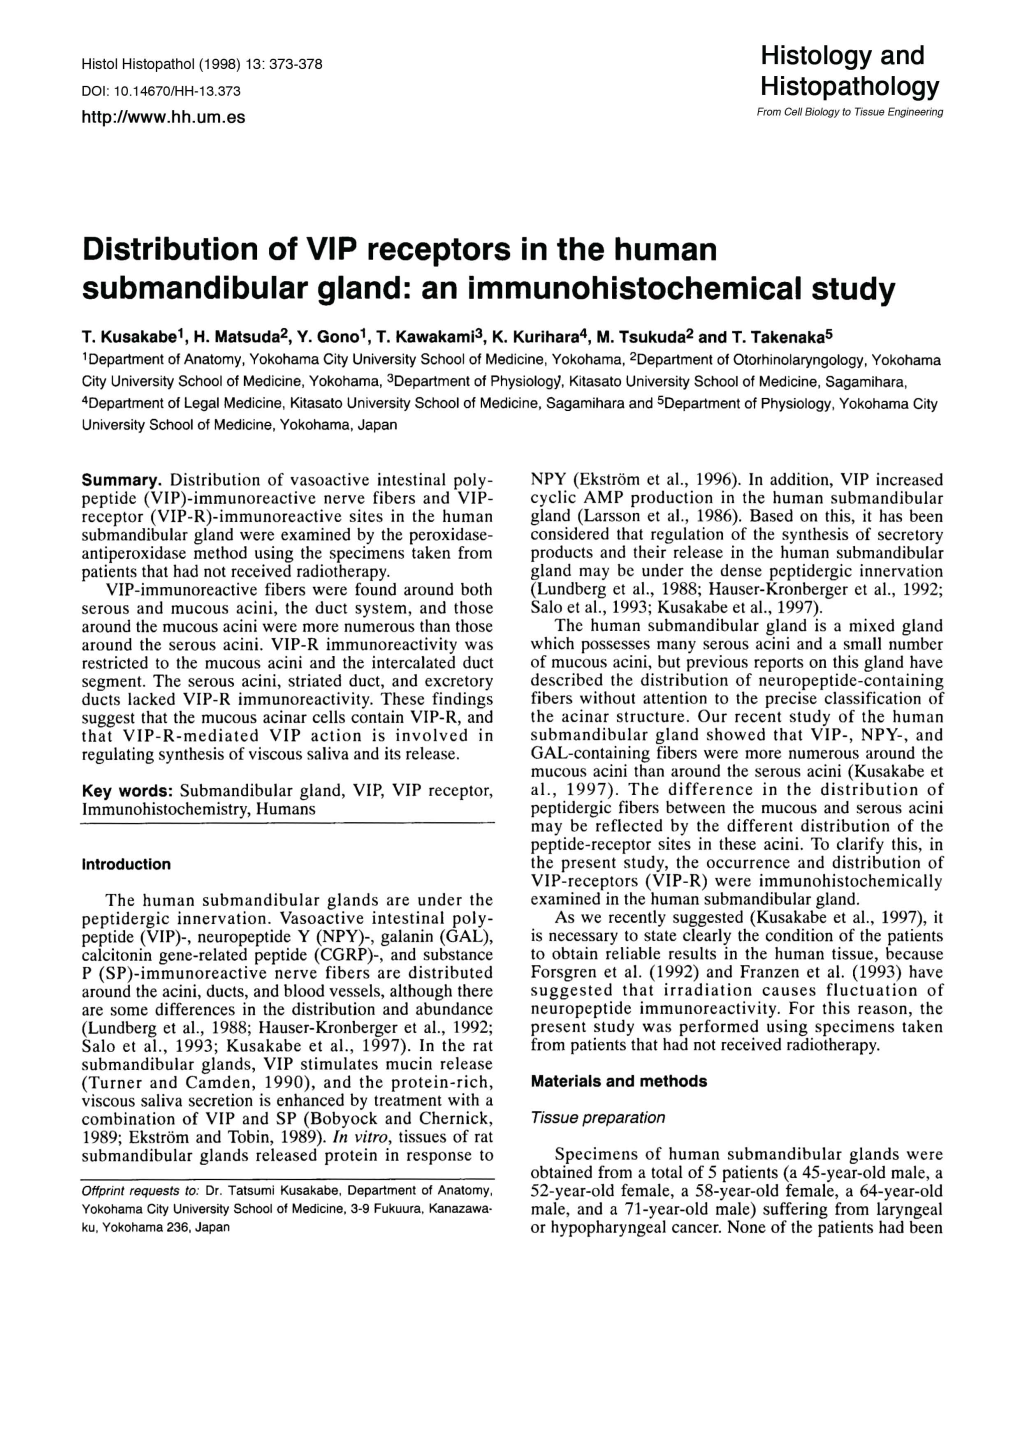 Distribution of VIP Receptors in the Human Submandibular Gland: an Immunohistochemical Study